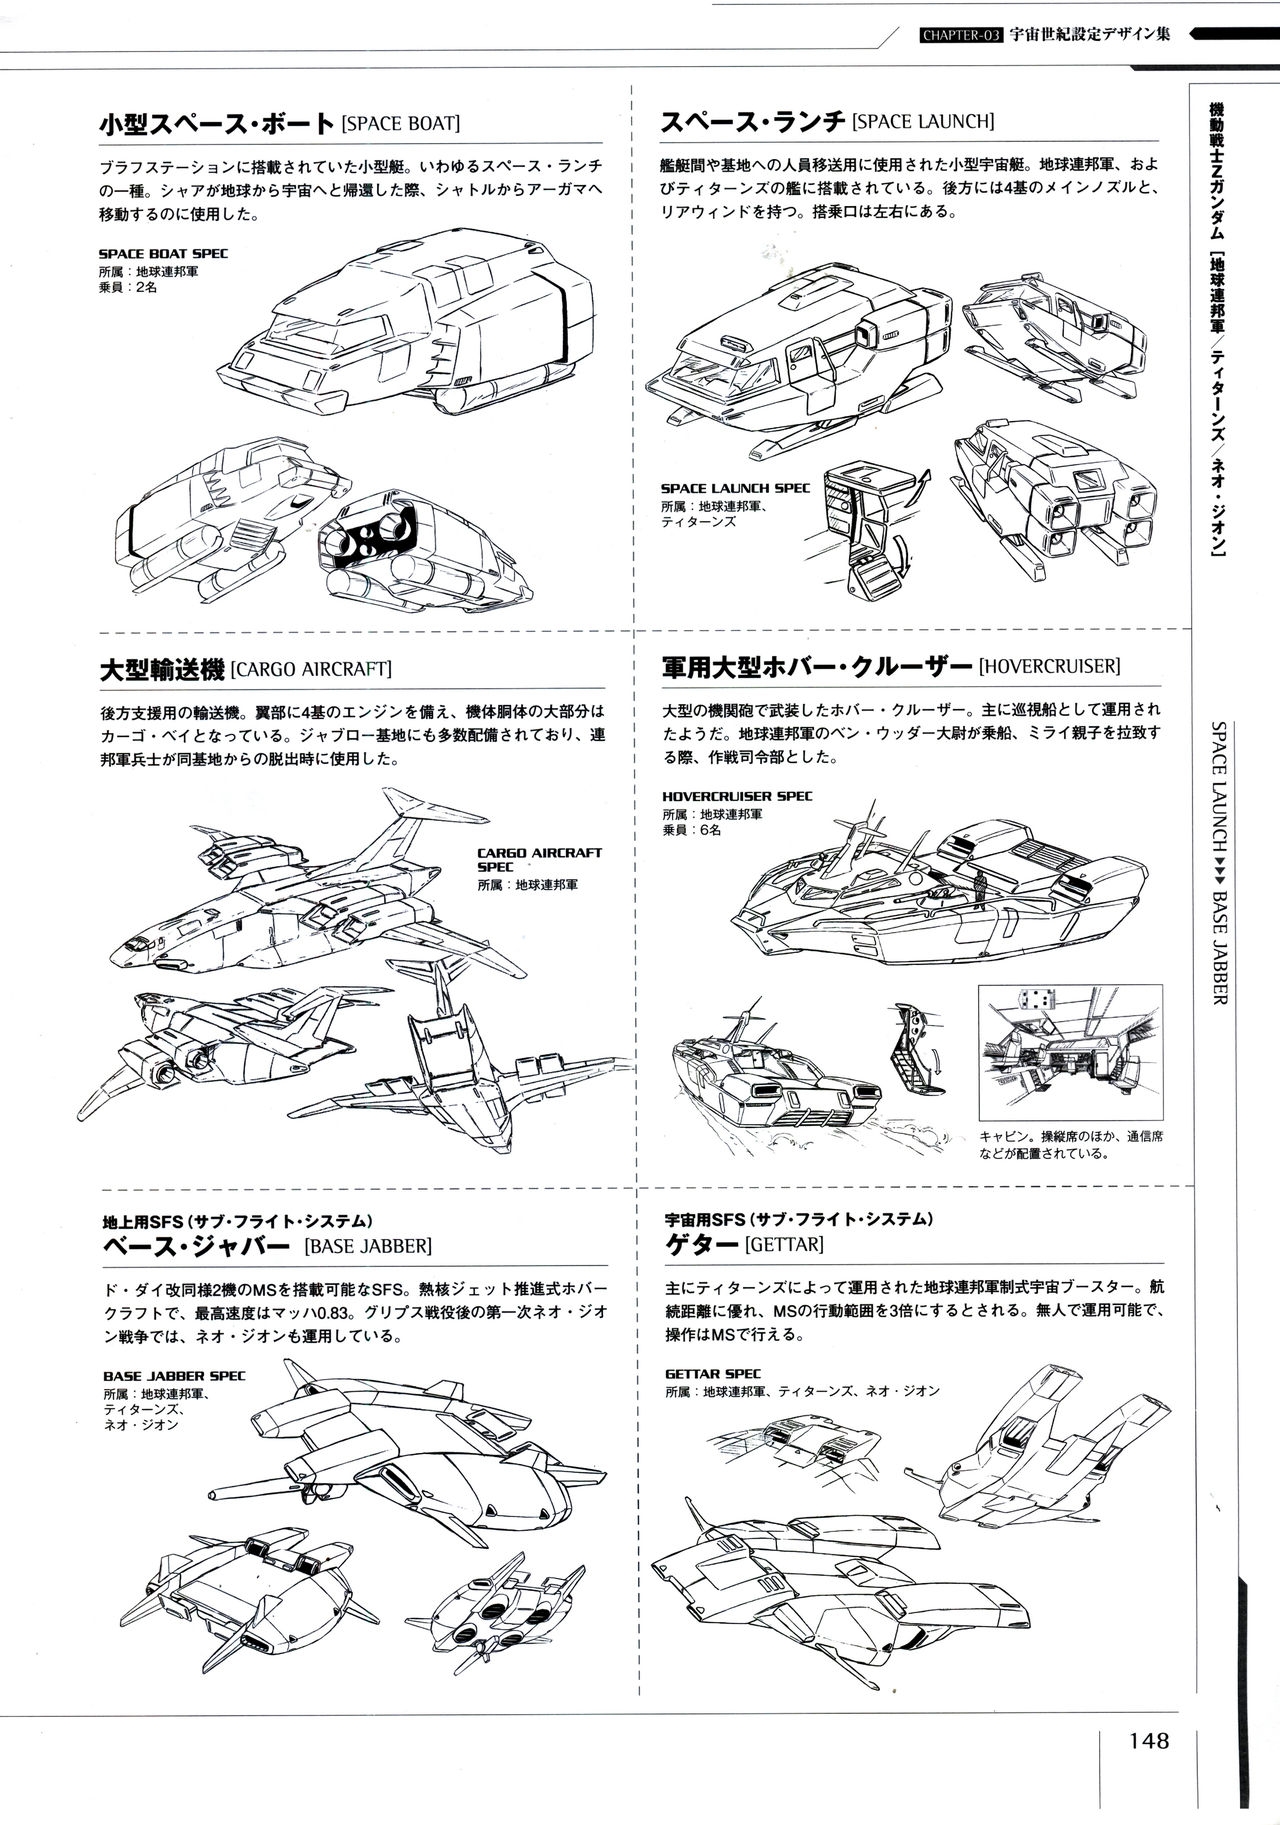 Mobile Suit Gundam - Ship & Aerospace Plane Encyclopedia - Revised Edition 153